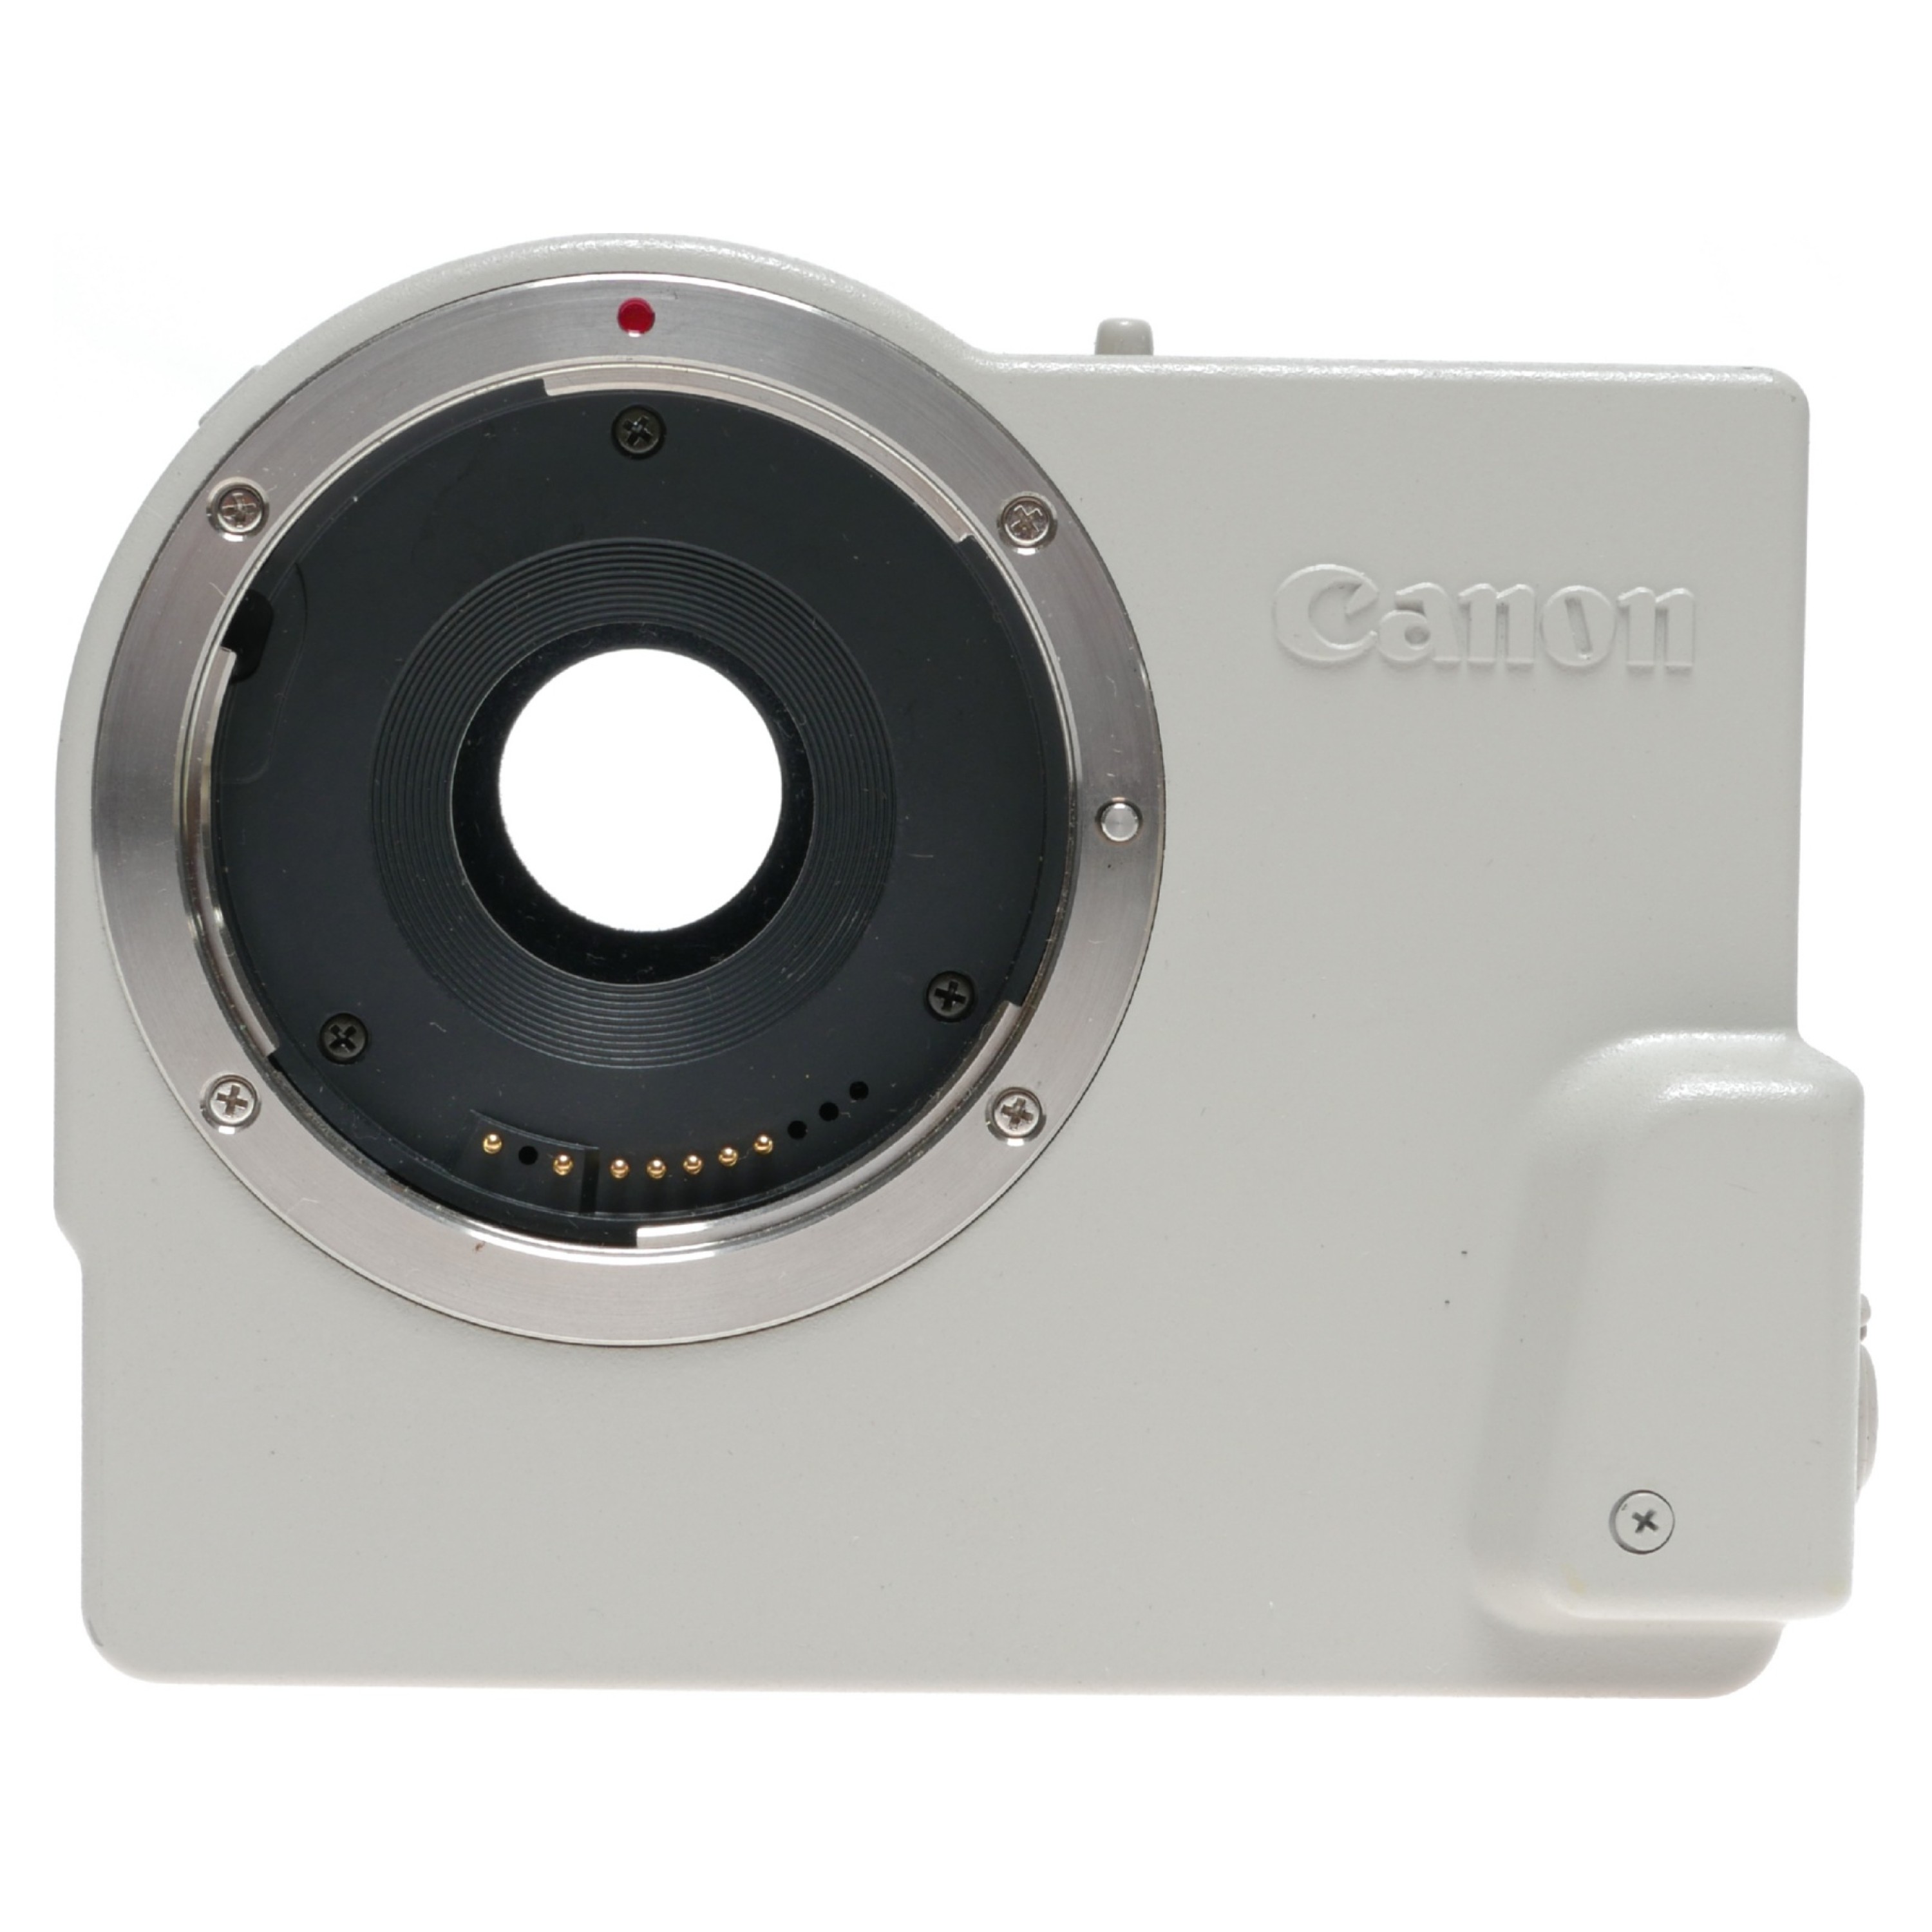 Herenhuis temperament Diversen Canon VL EOS Lens Adapter to XL1 or XL2 Video Camera